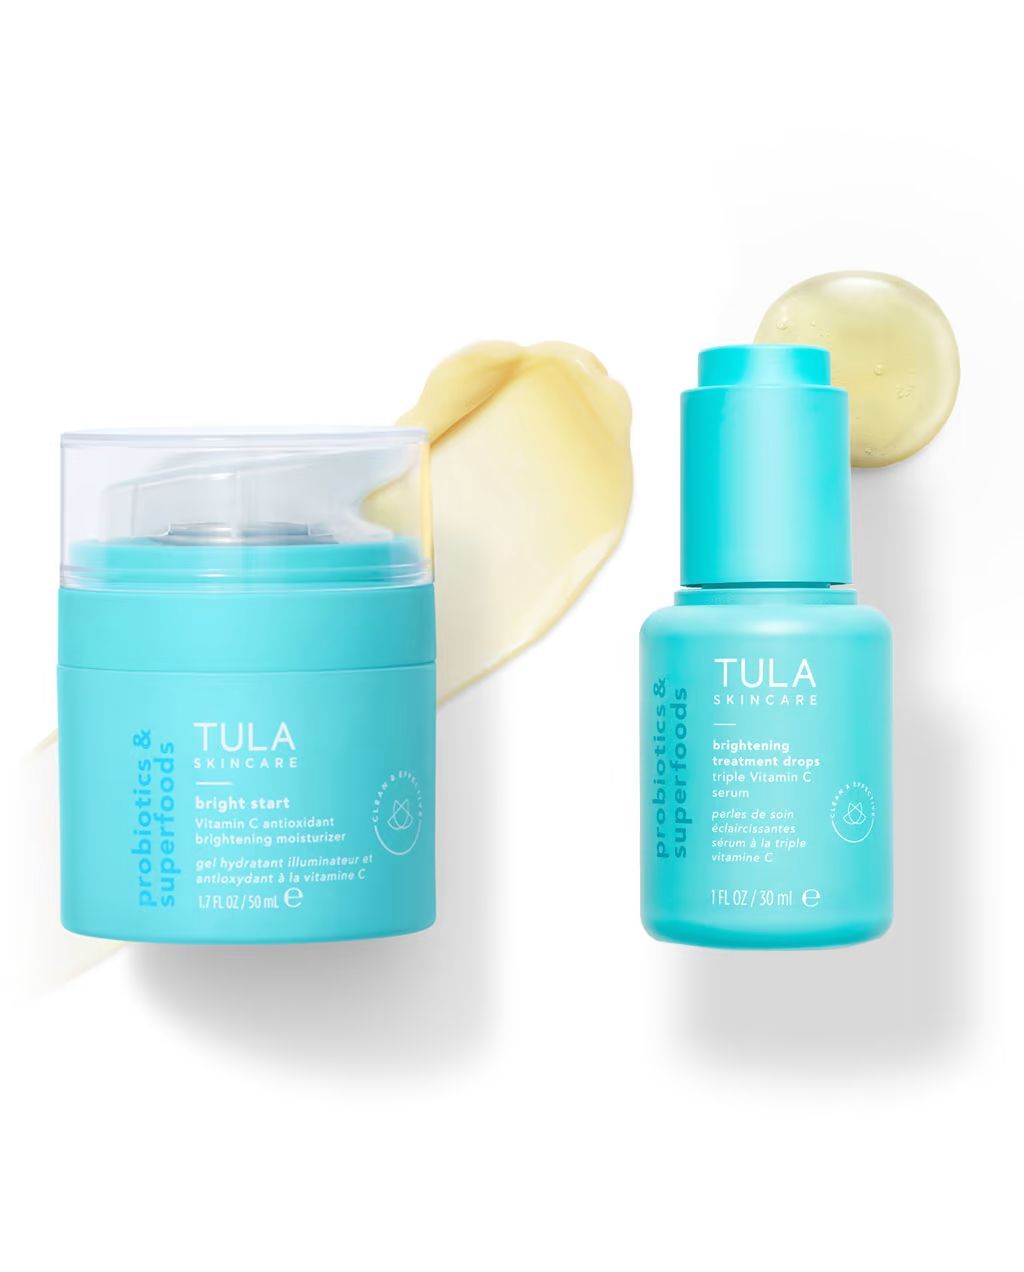 vitamin C antioxidant brightening moisturizer | Tula Skincare